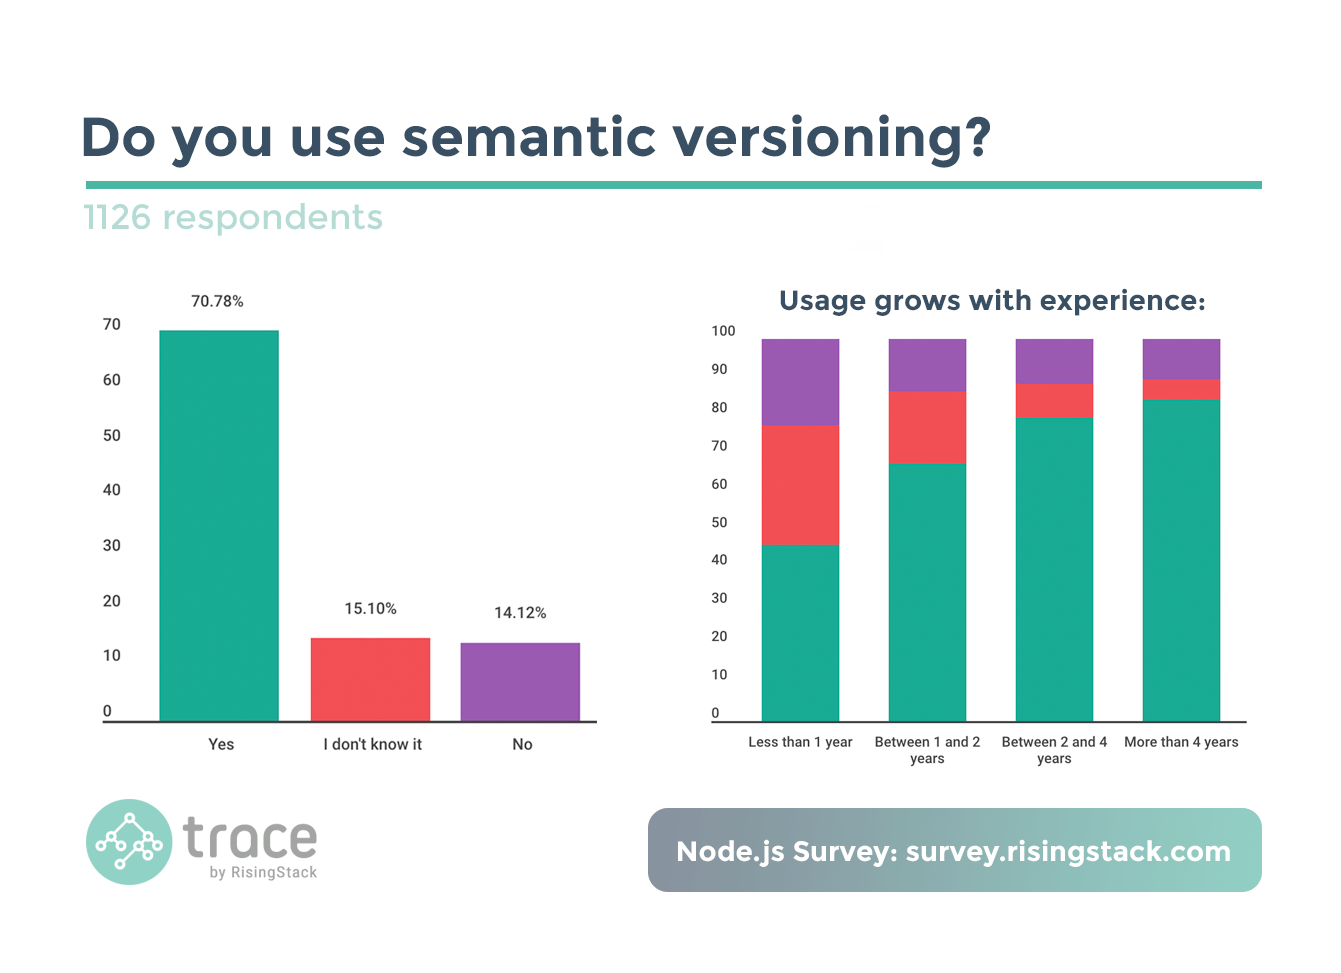 Node.js Survey - Do you use semantic versioning? Mostly yes.